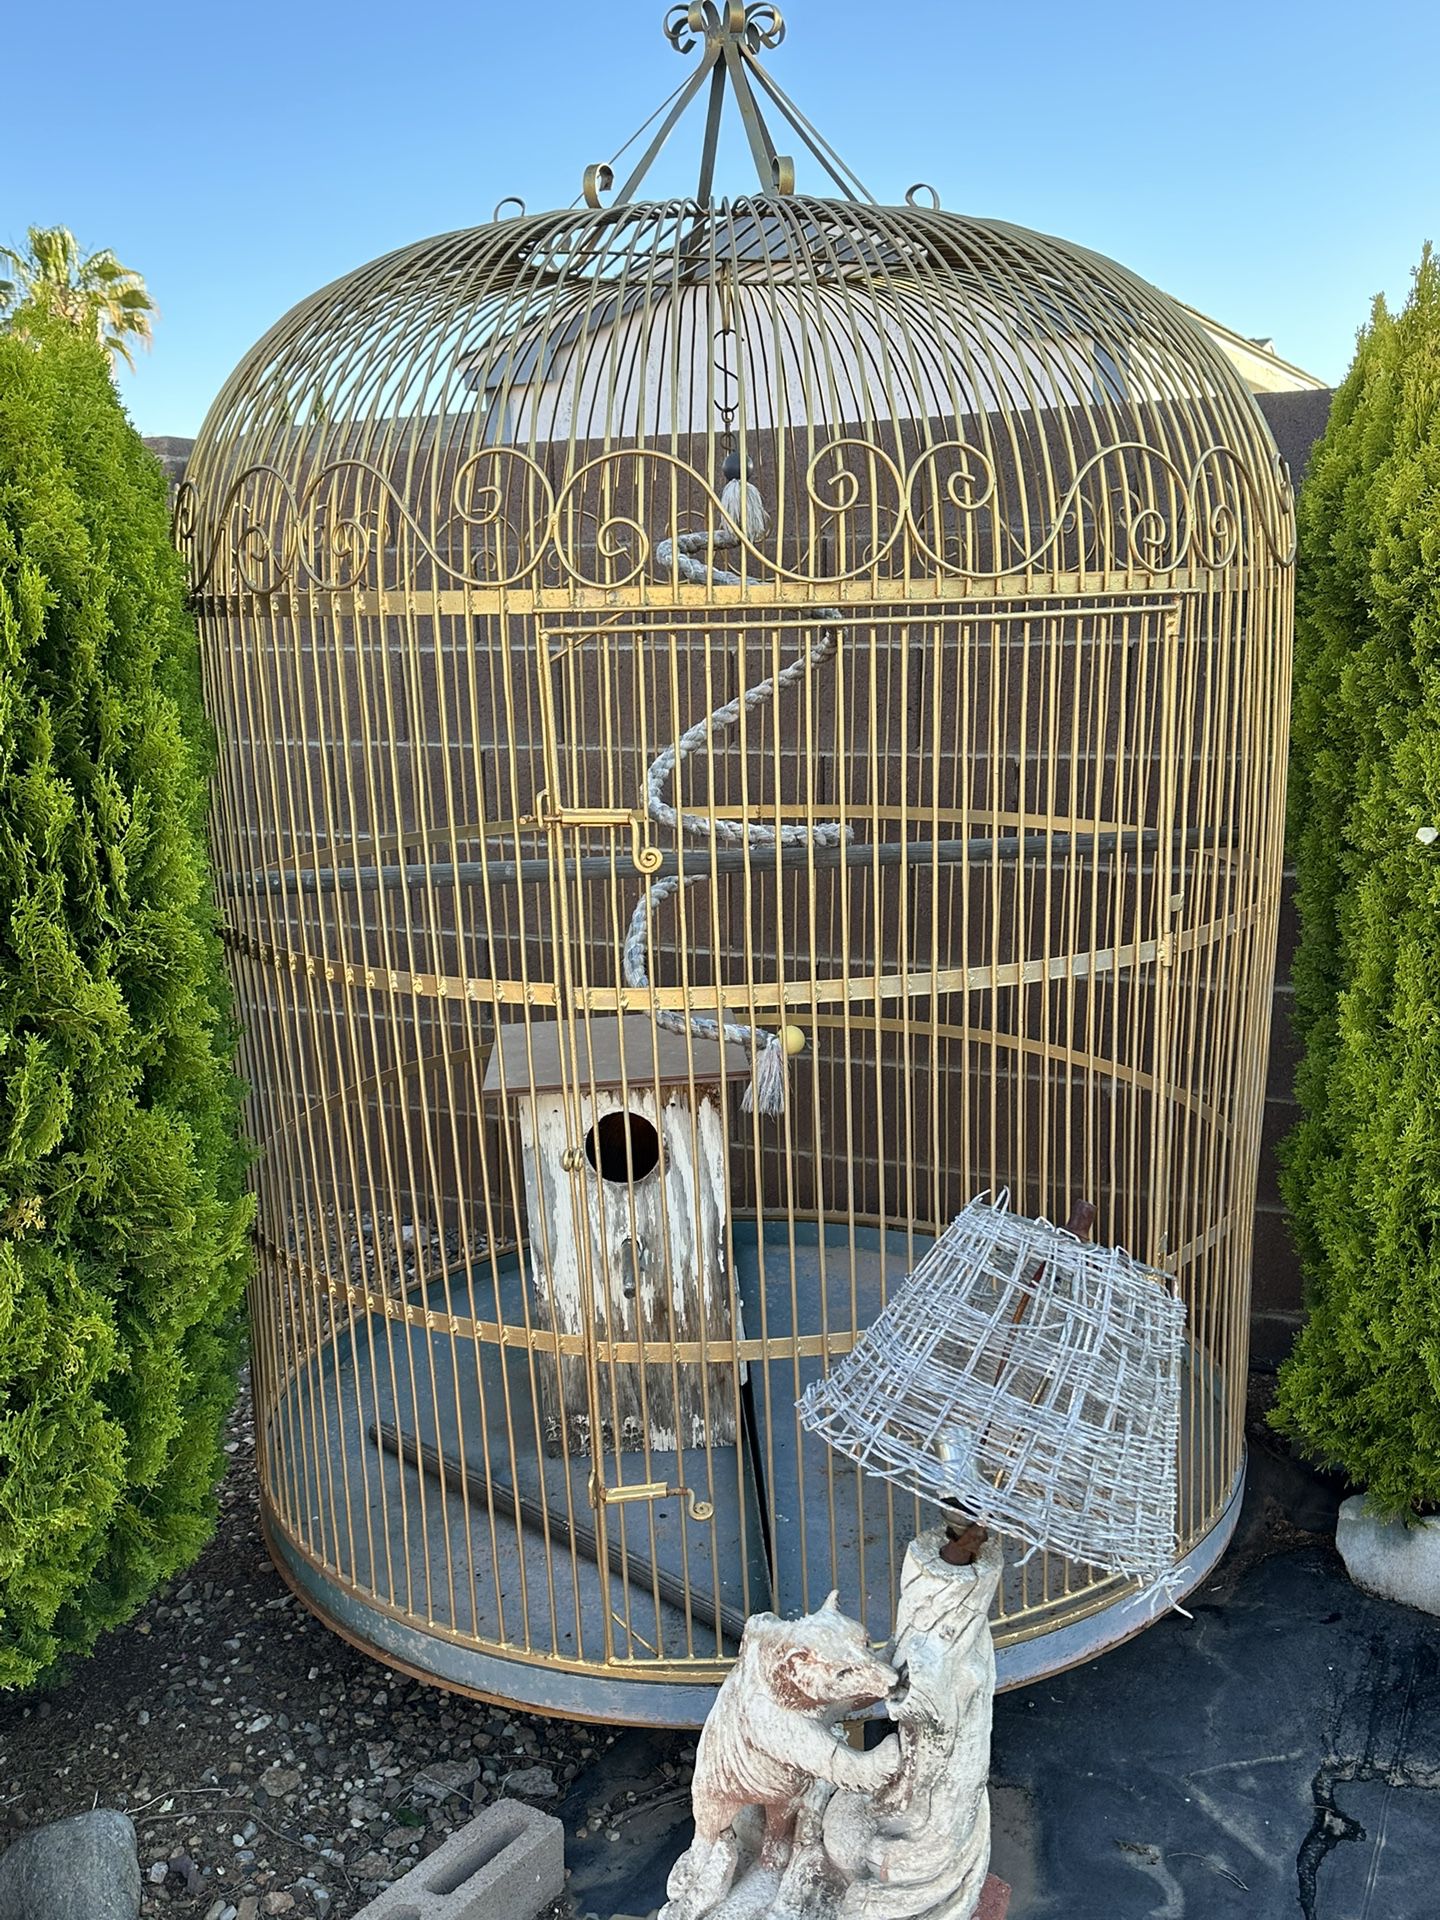 Larg Bird Cage Metal Heavy $500